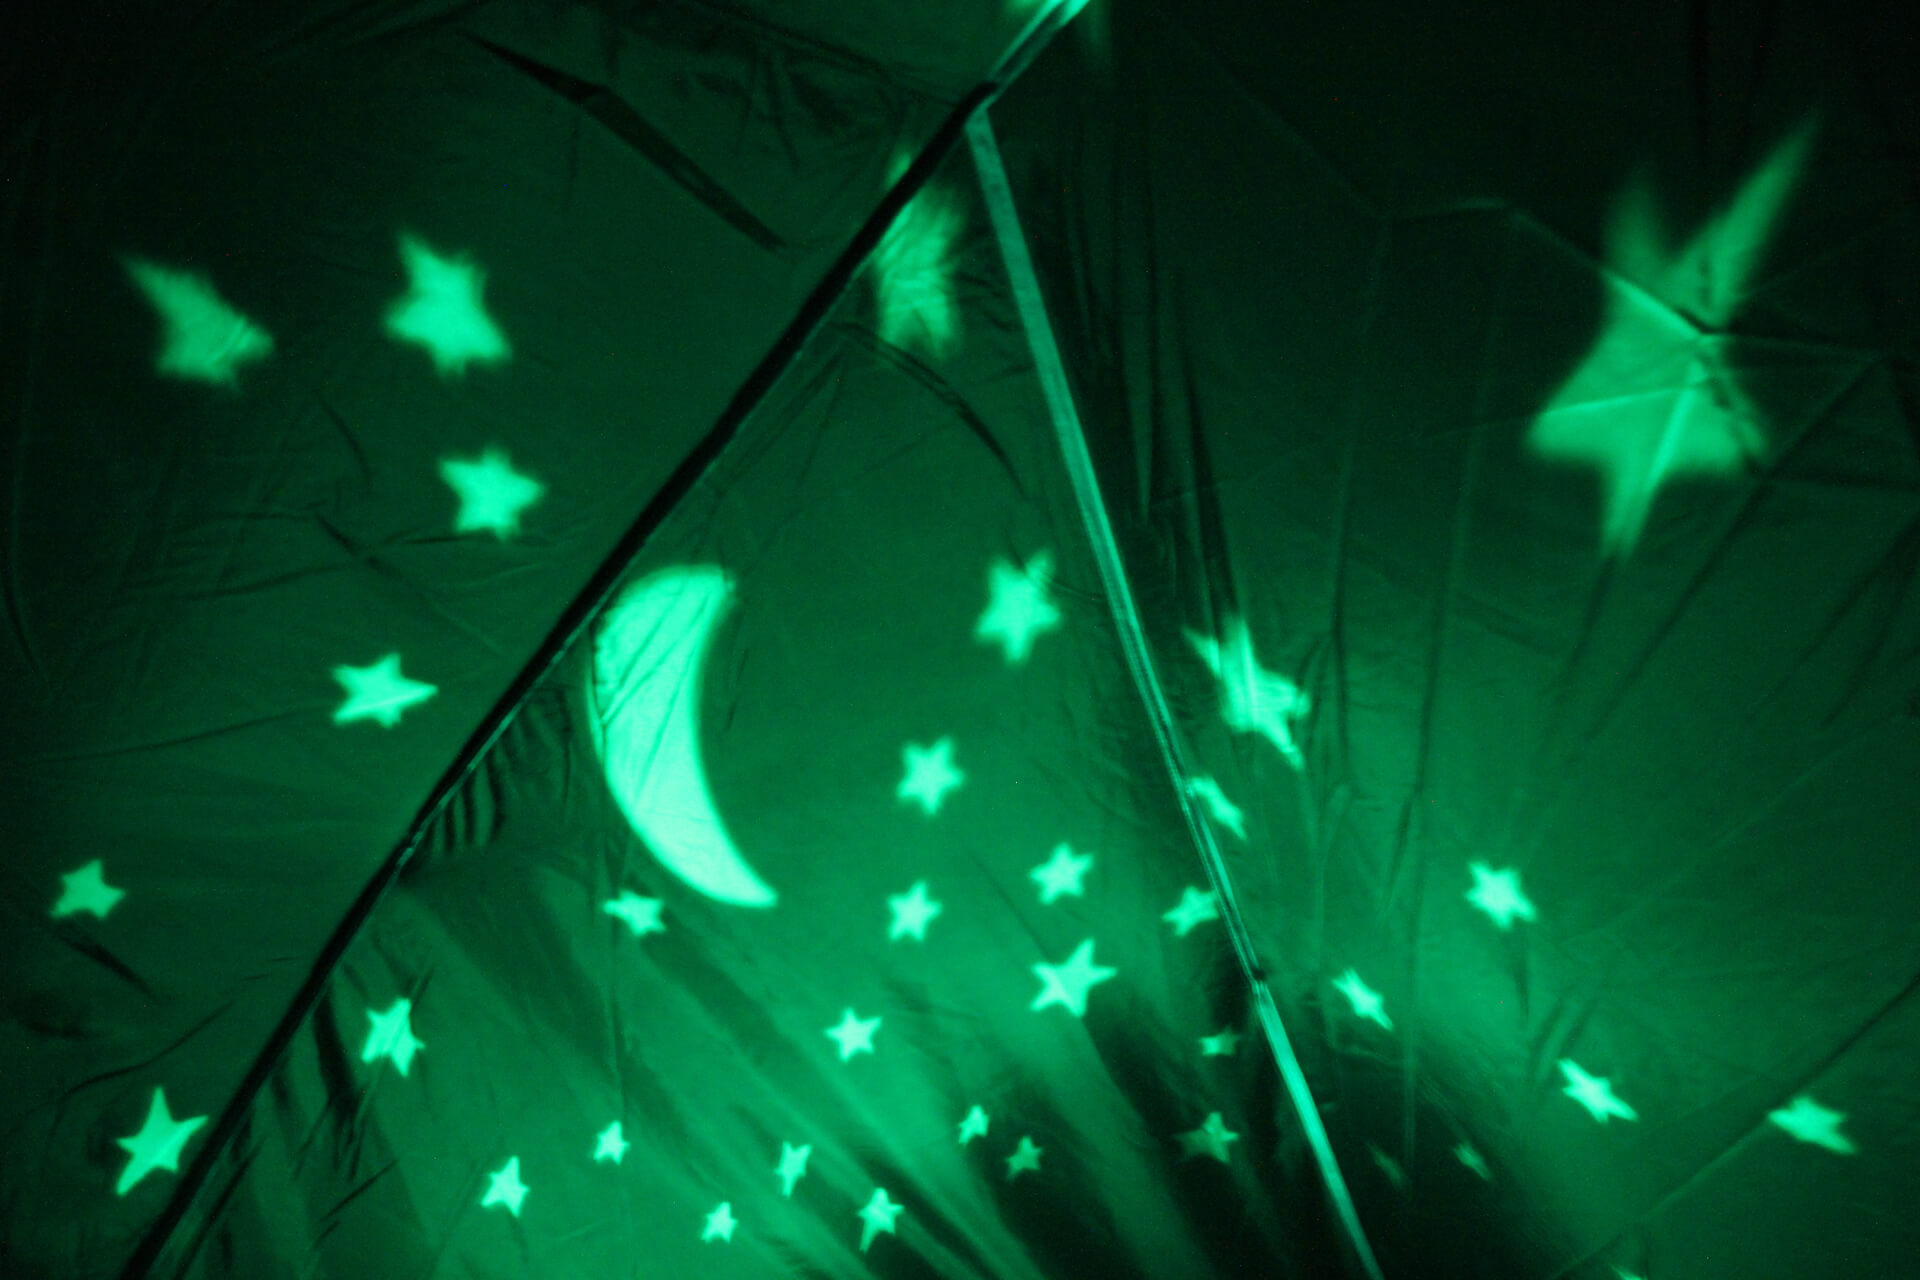 Quechua stars inide the tent